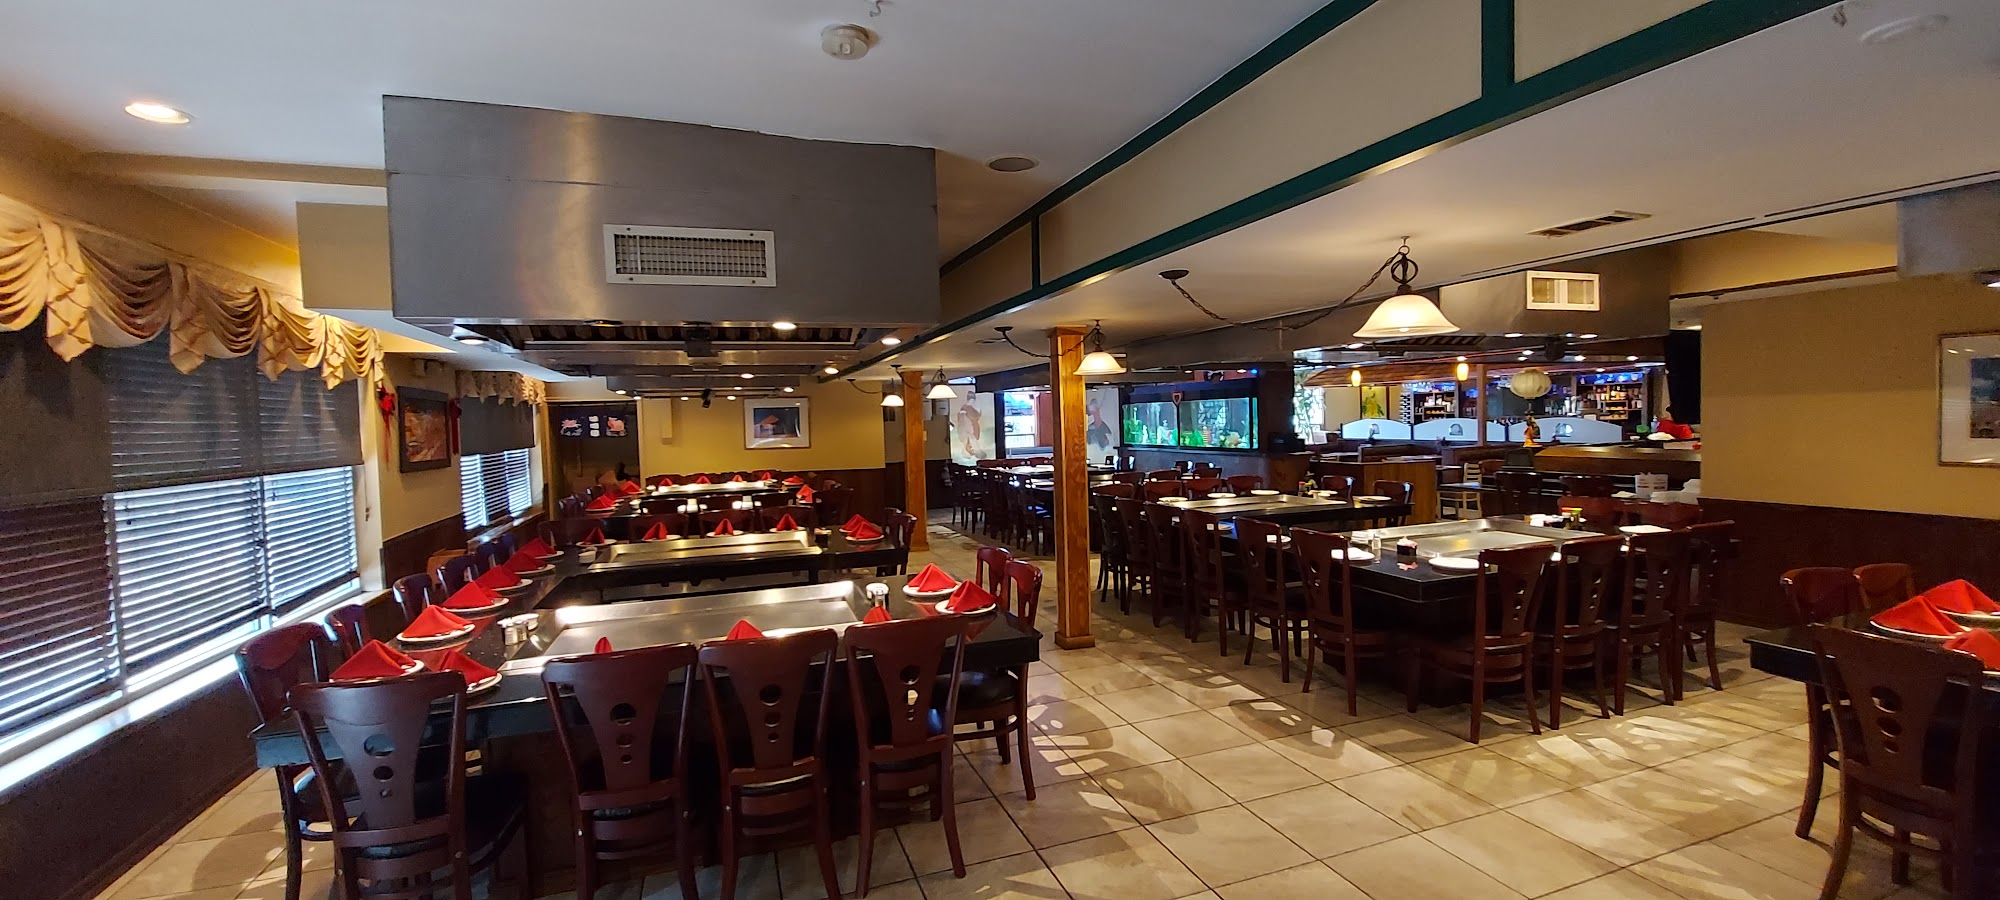 Shangrila Restaurant and Bar